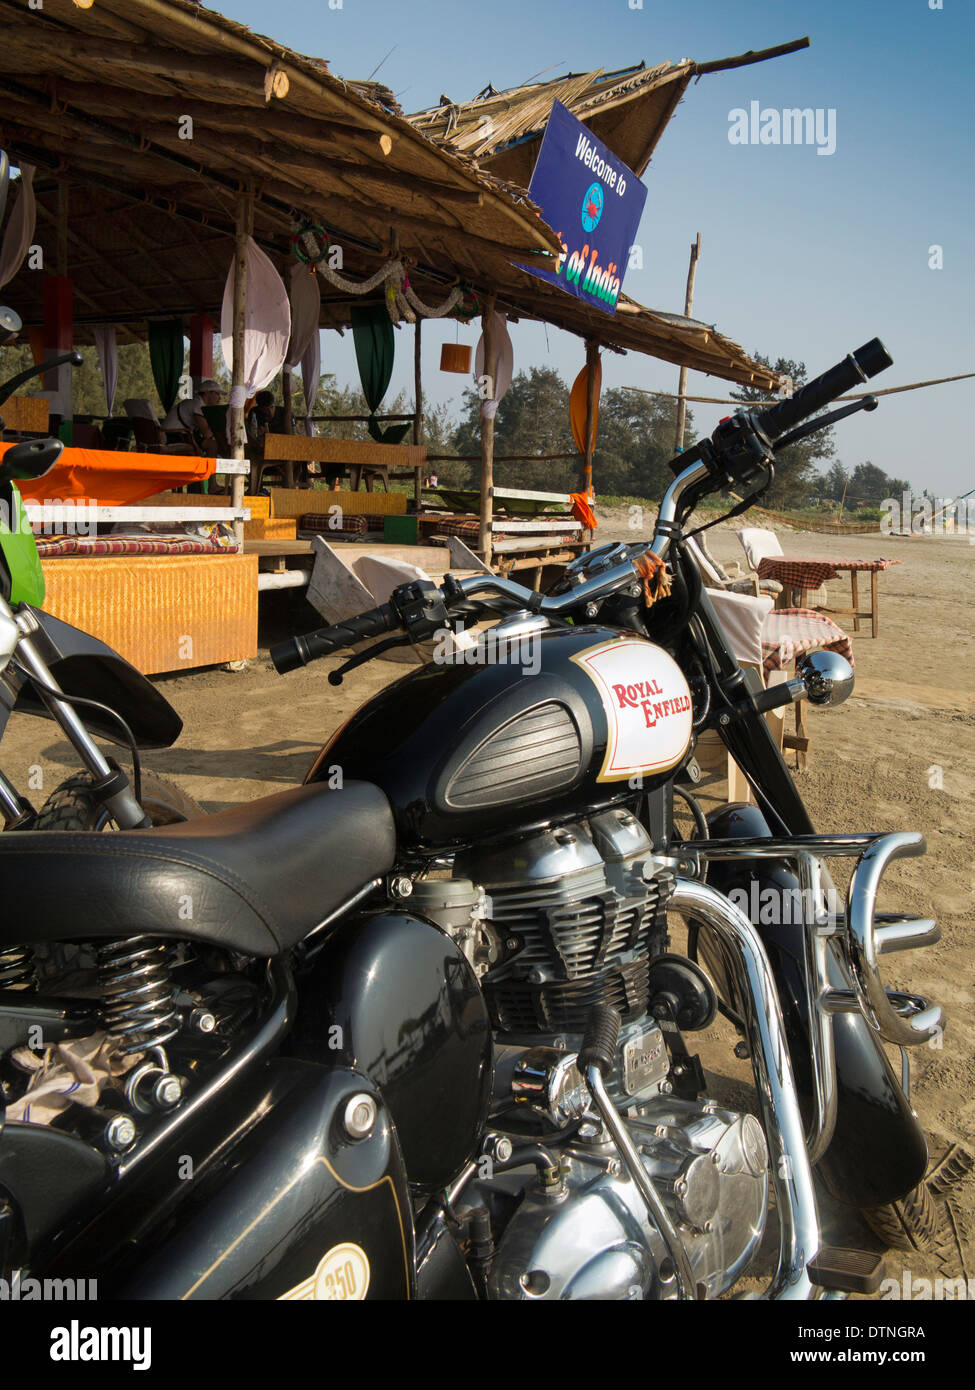 India, Goa, Morjim, Royal Enfield 350 Bullet motorcycle parked at beach shack Stock Photo